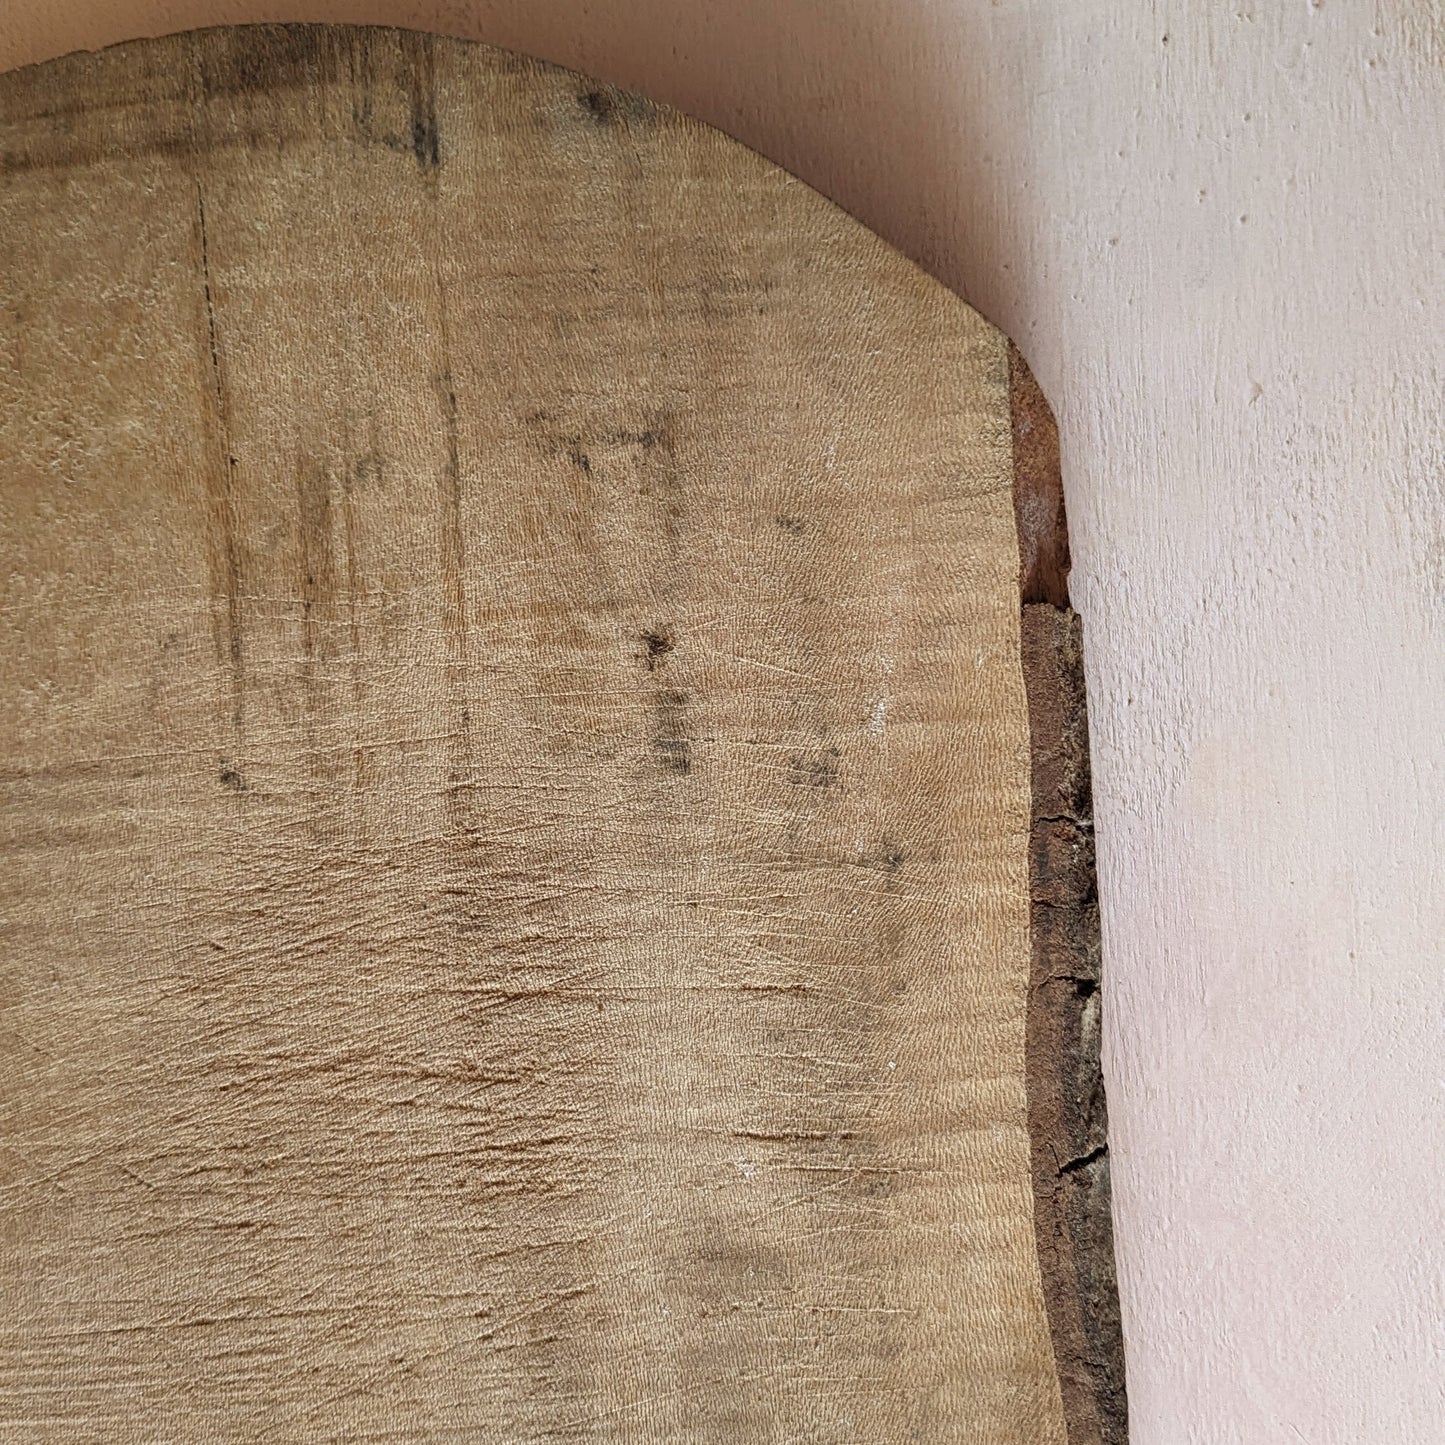 Oblong Rustic Raw Wood Antique Board